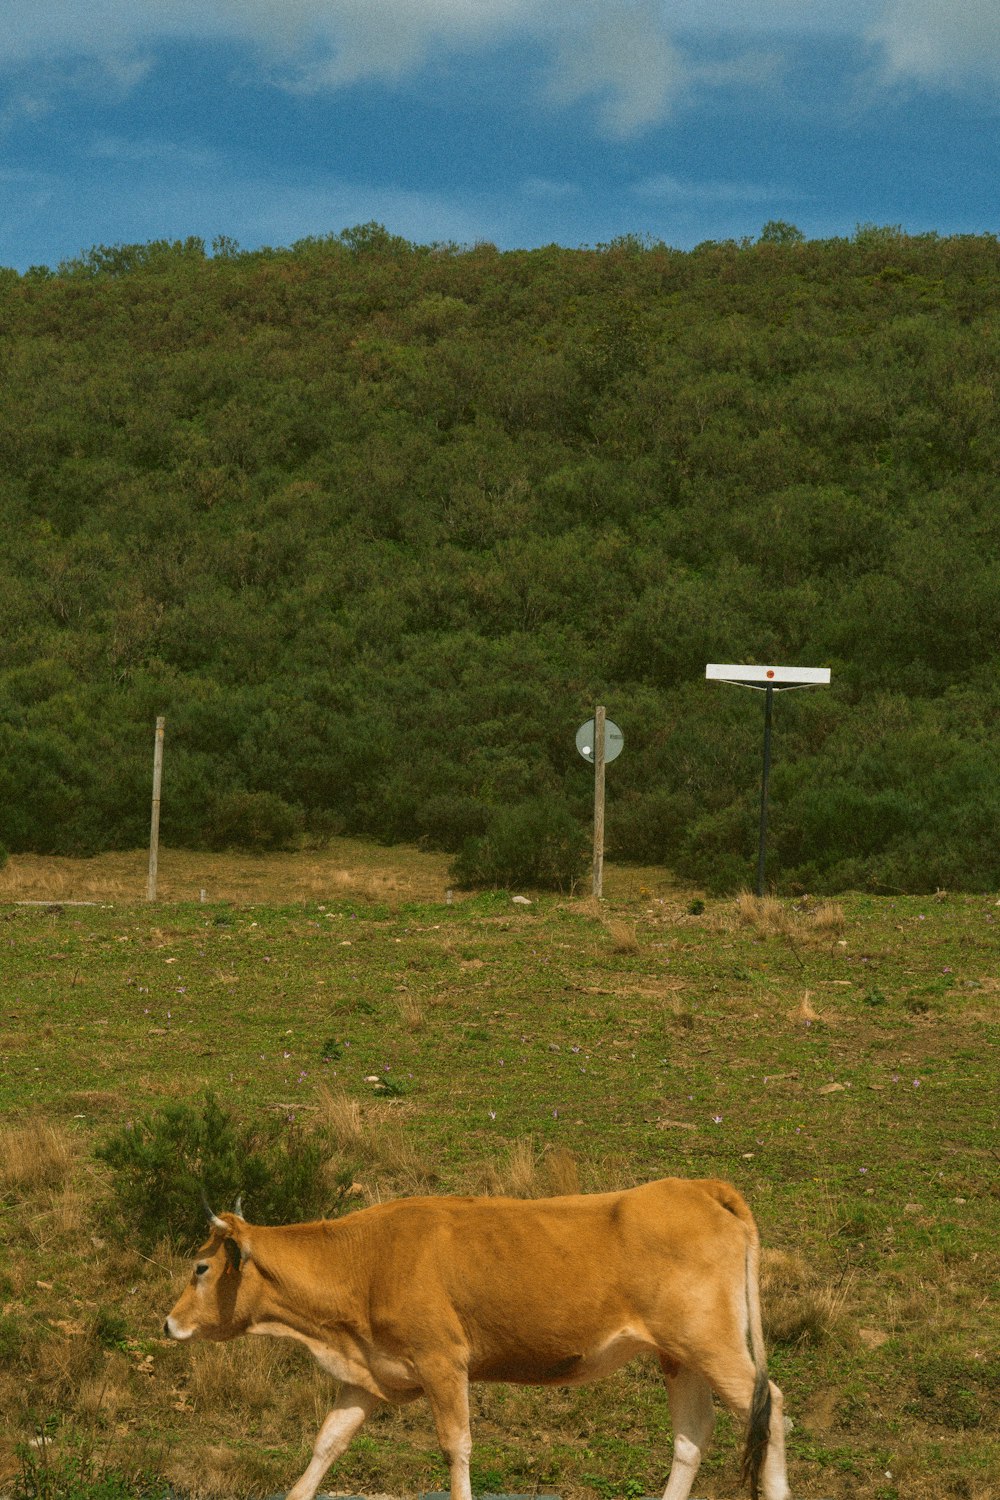 a brown cow walking across a lush green field